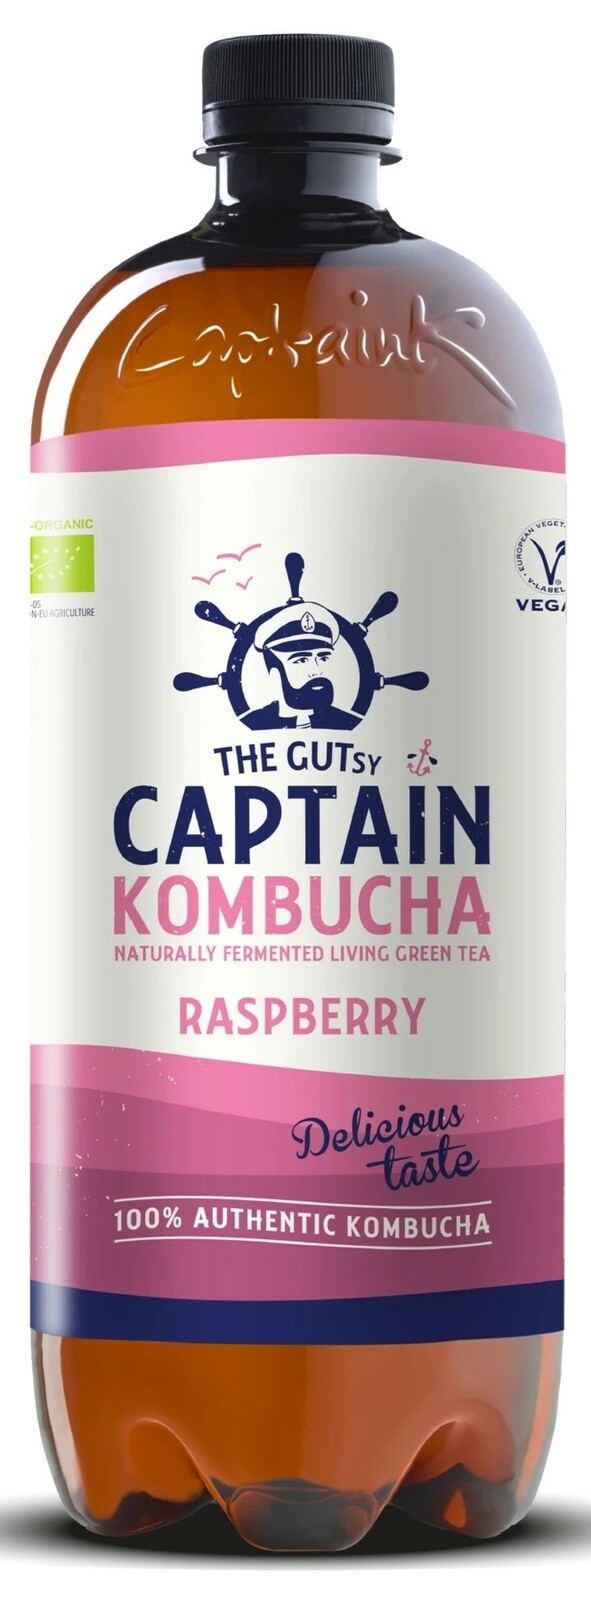 The GUTsy Captain Kombucha Raspberry